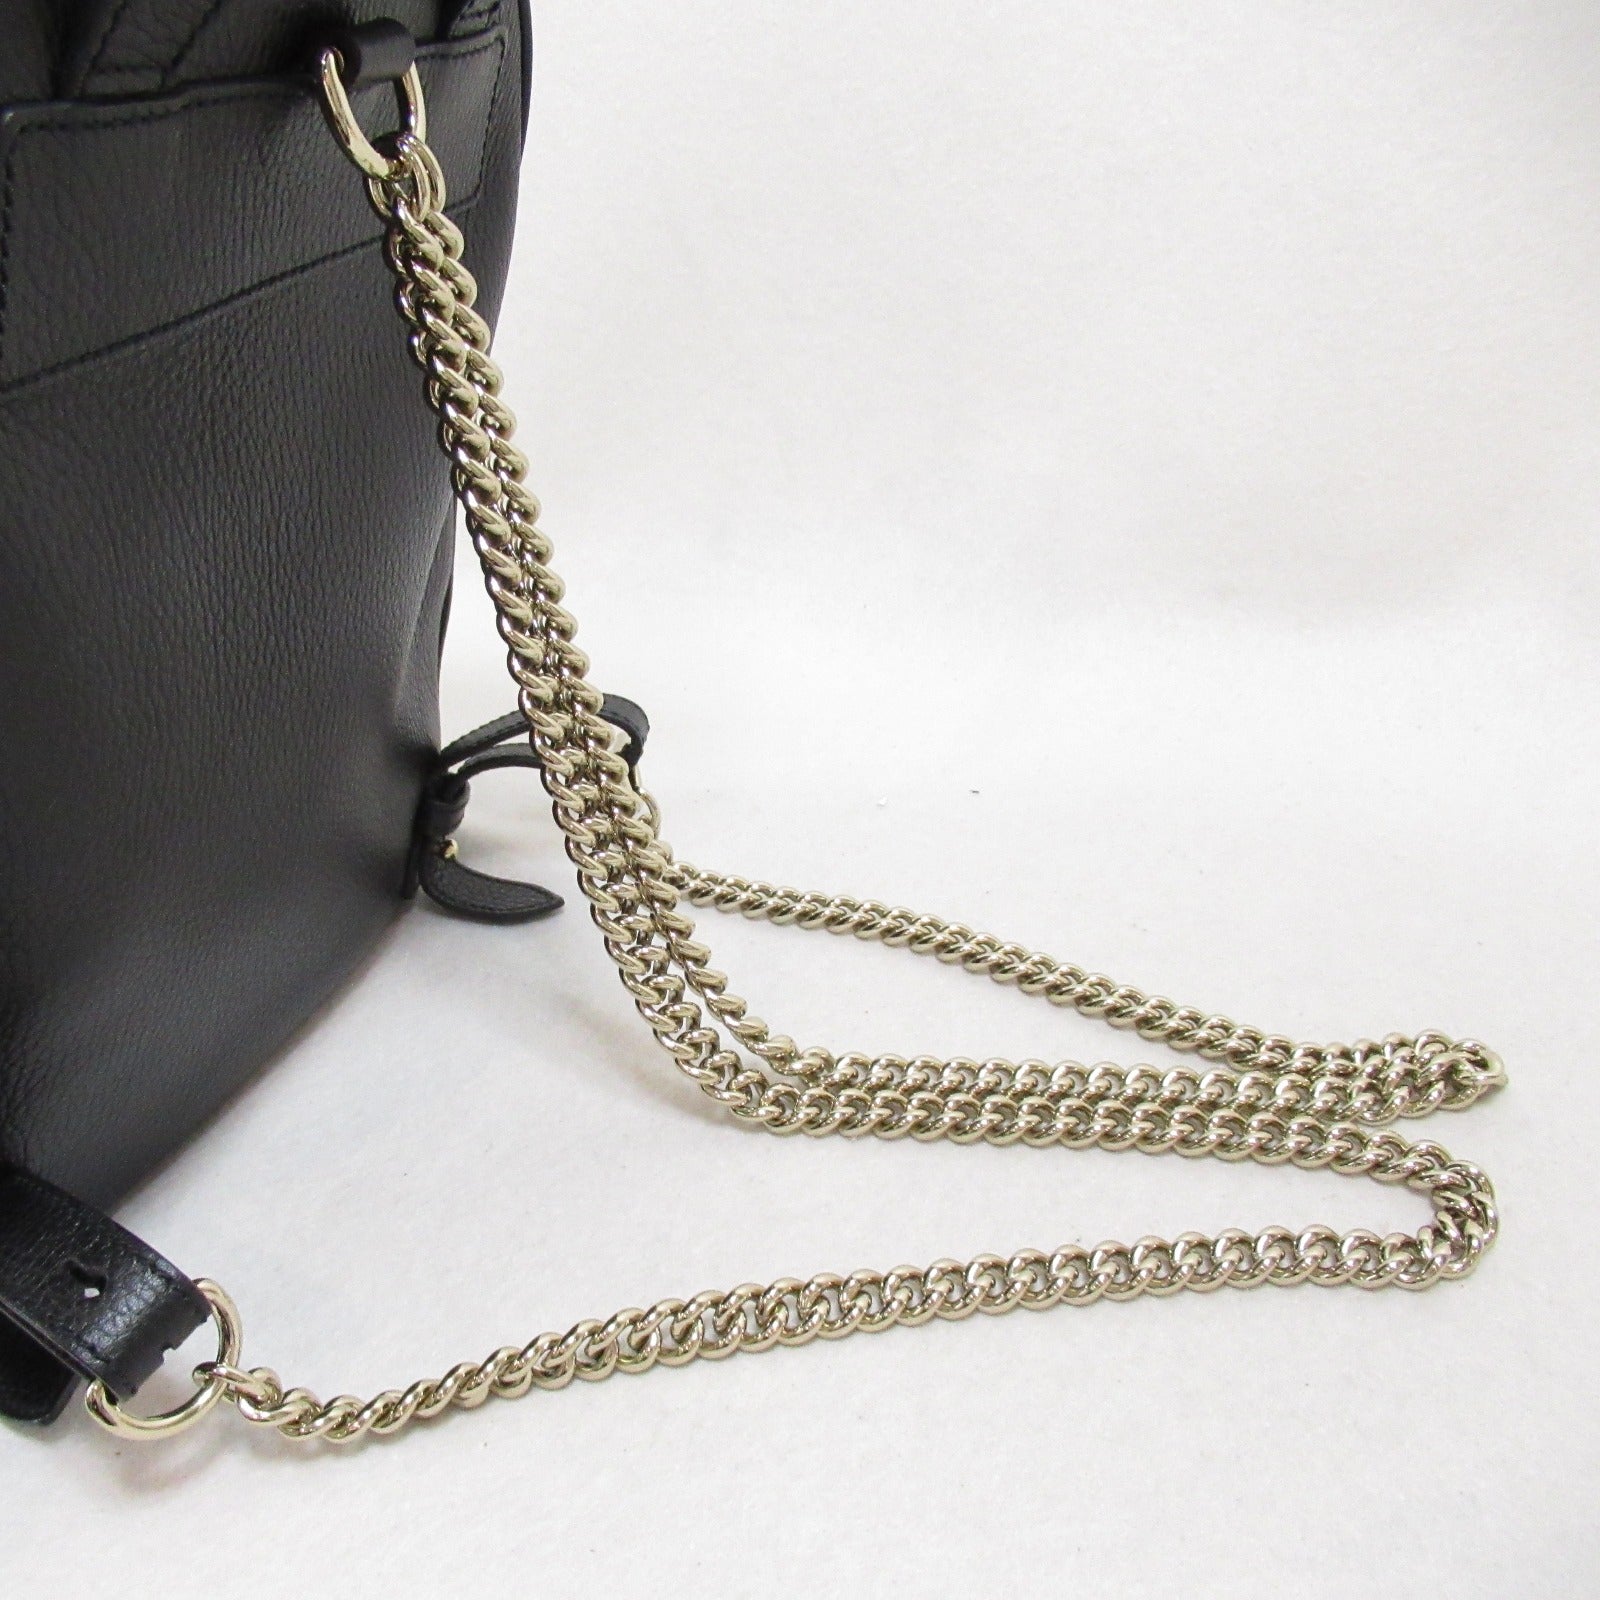 Gucci  Backpack Interlocking G Rucksack Backpack Leather  Black  536192